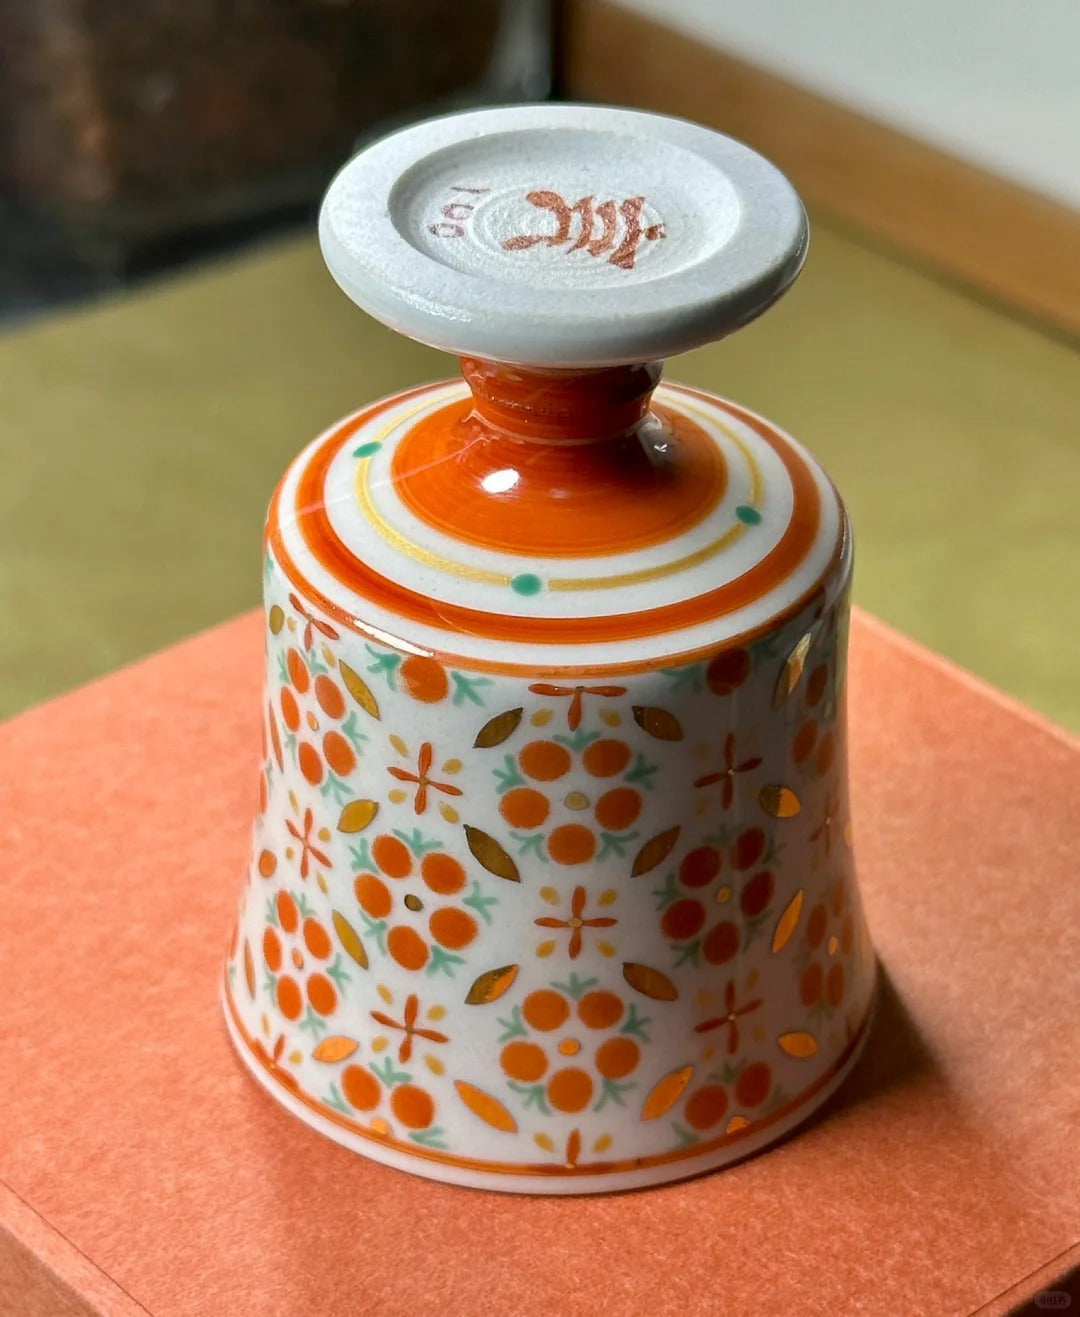 [Qinghetang x Gohobi Gallery] Hand-painted Golden Red Orange Lotus Tea Cup with Stem